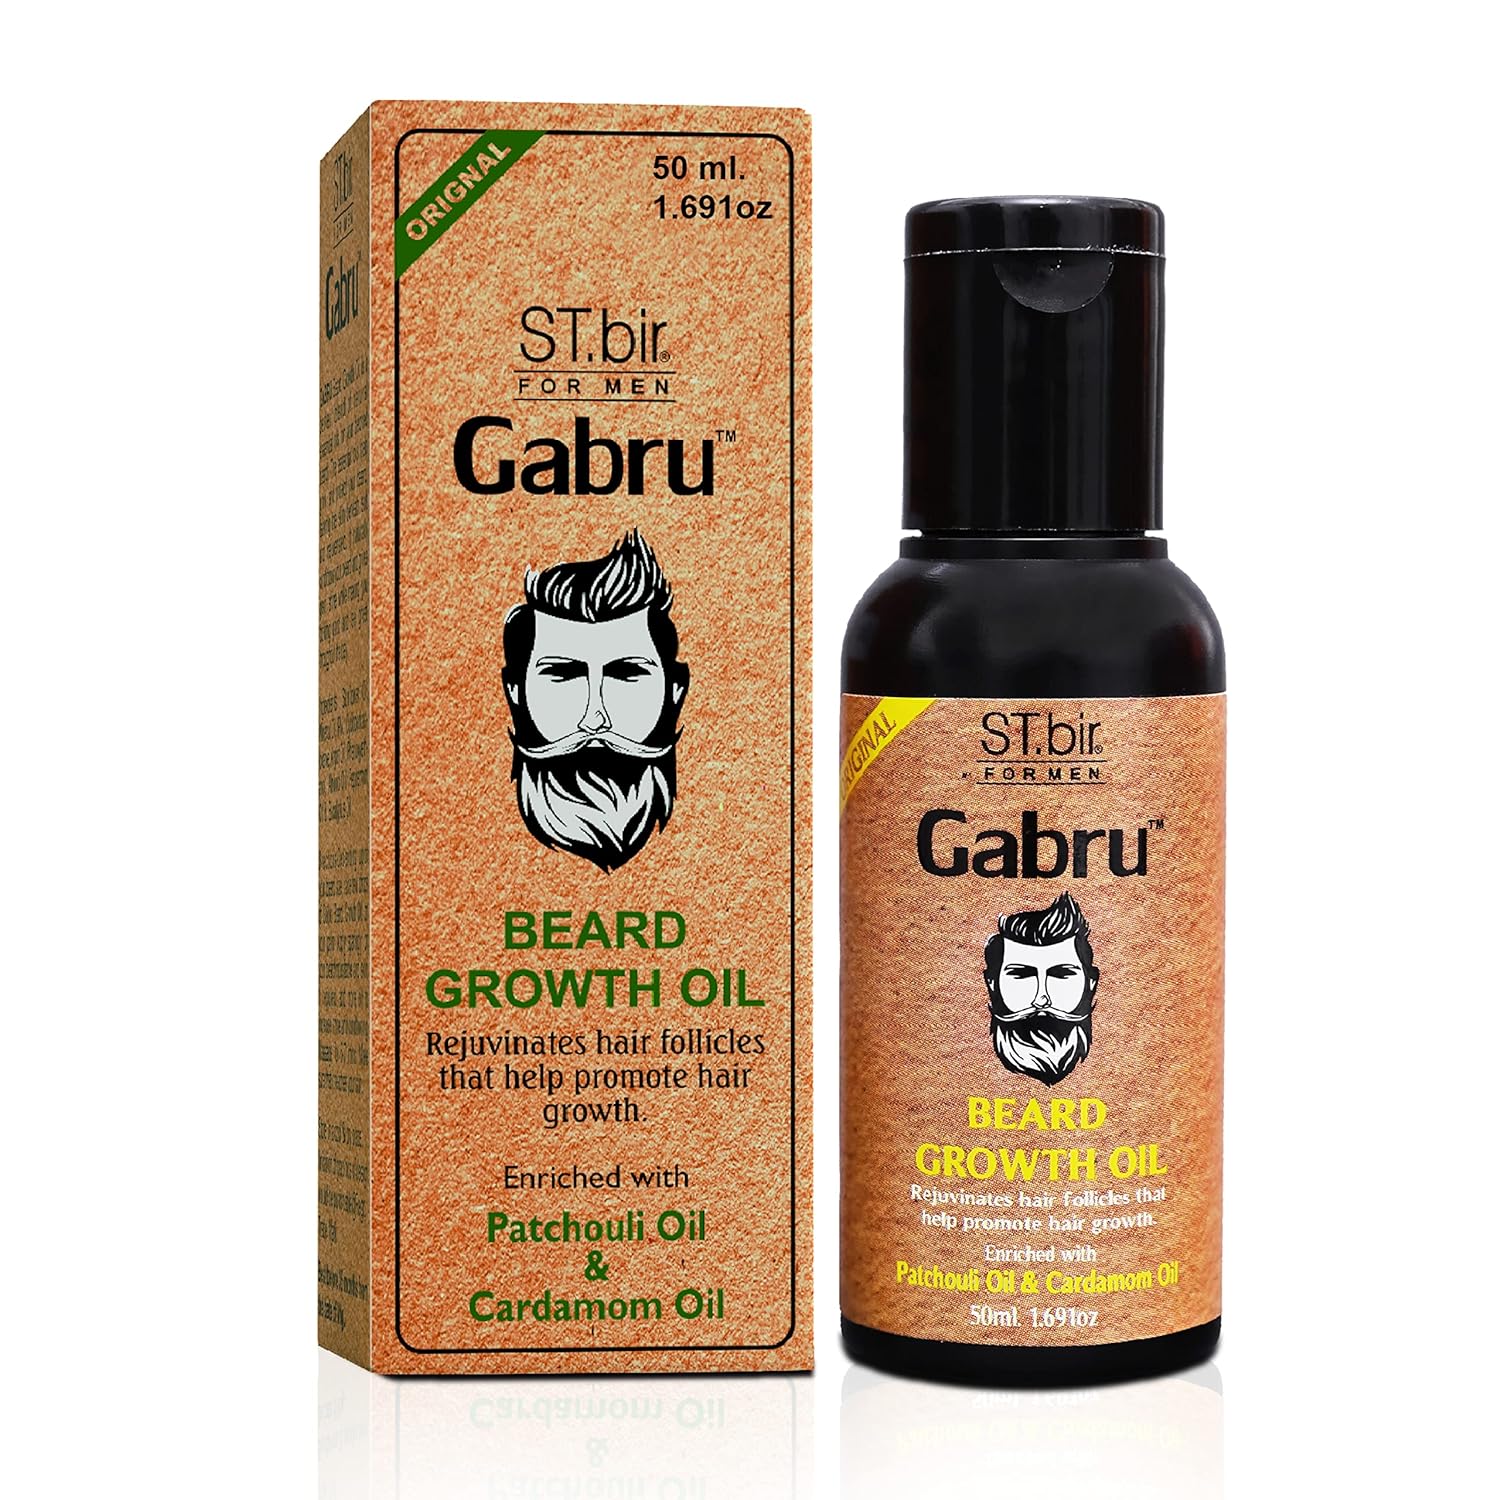 St. Bir Gabru Beard Growth Oil Patchouli & Cardamom Oil (50ml)